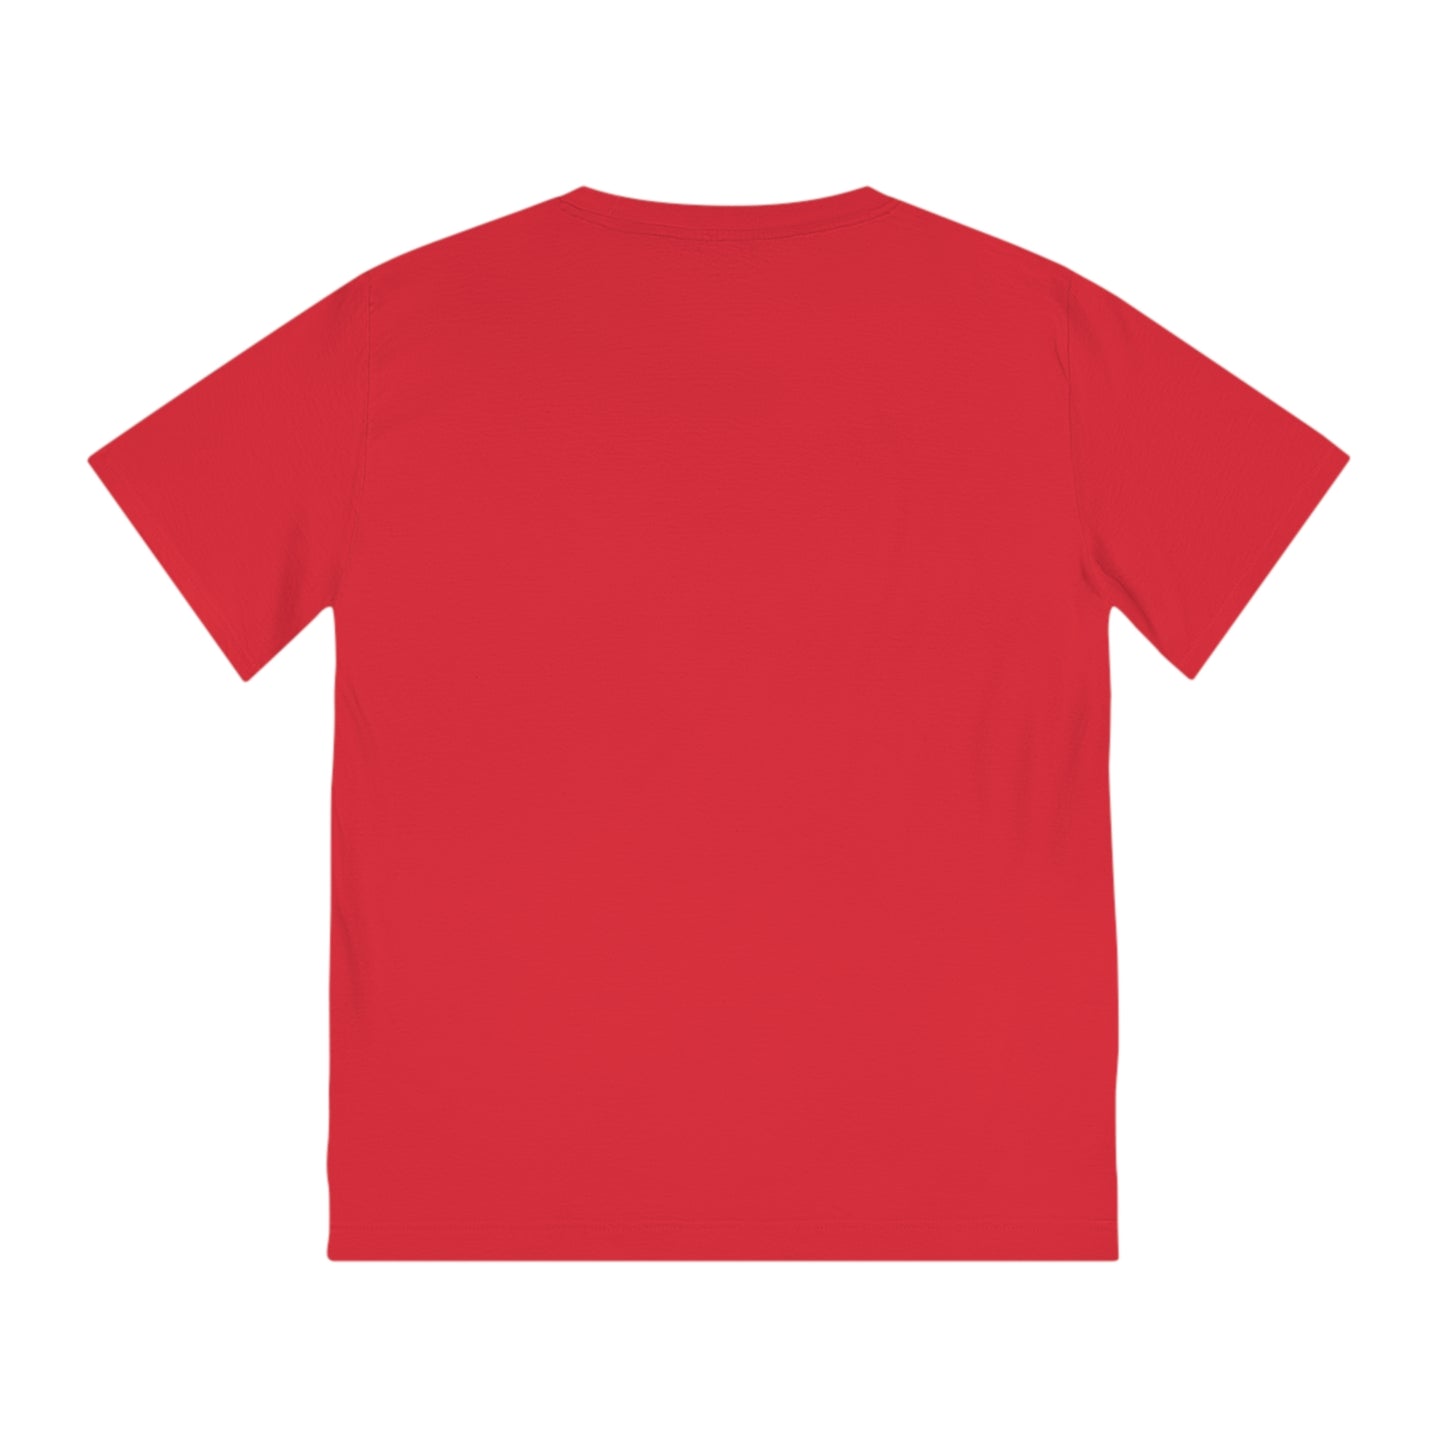 TROPICAL MINIMAL 101 - Unisex Rocker T-Shirt